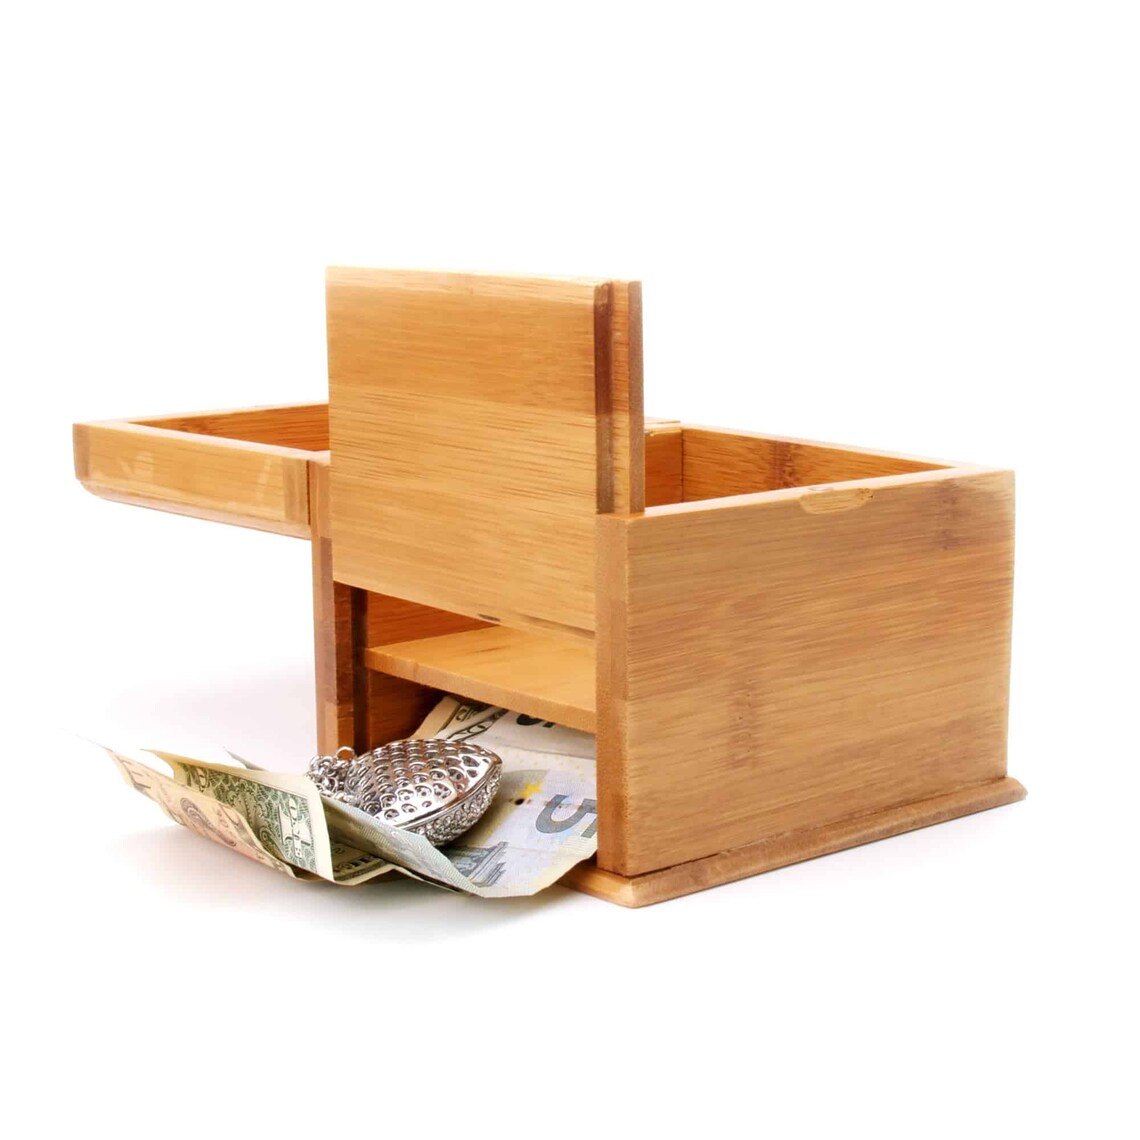 Wooden Bamboo Box Secret Stash Hidden Storage Home Security Etsy